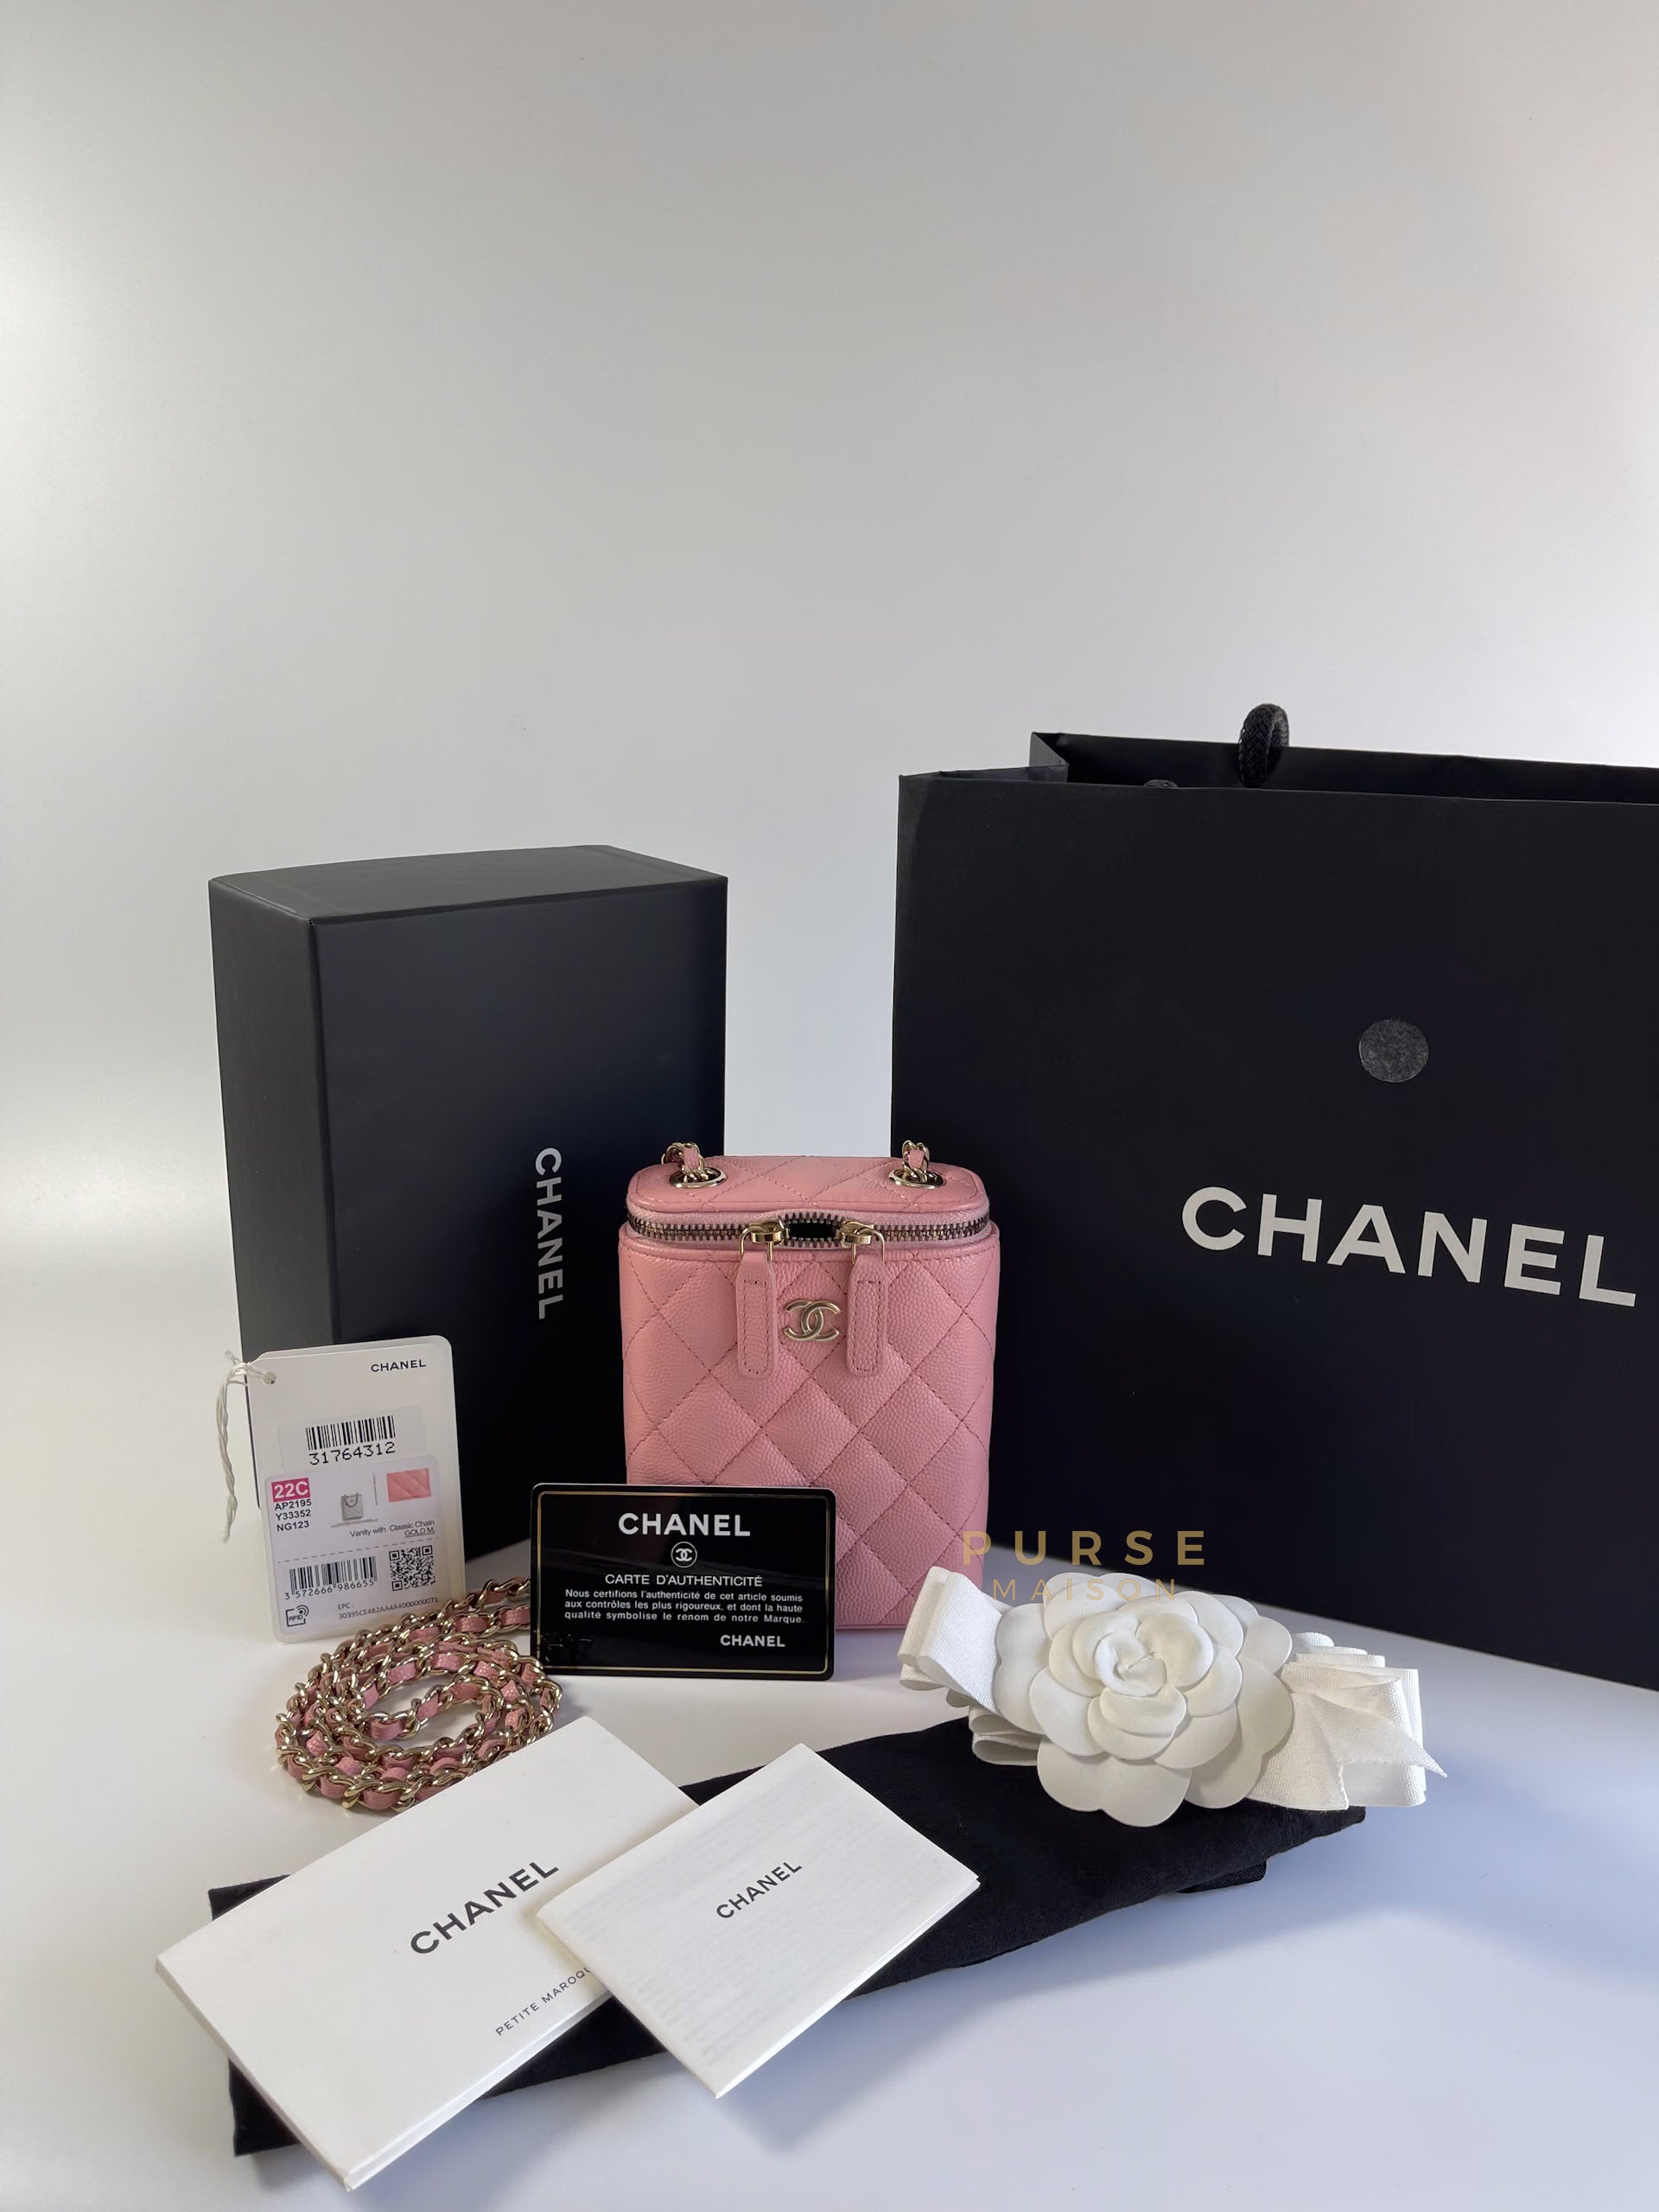 Mini Vertical Vanity 22c on Chain in Sakura Pink Caviar & Light Gold Hardware Series 31 | Purse Maison Luxury Bags Shop